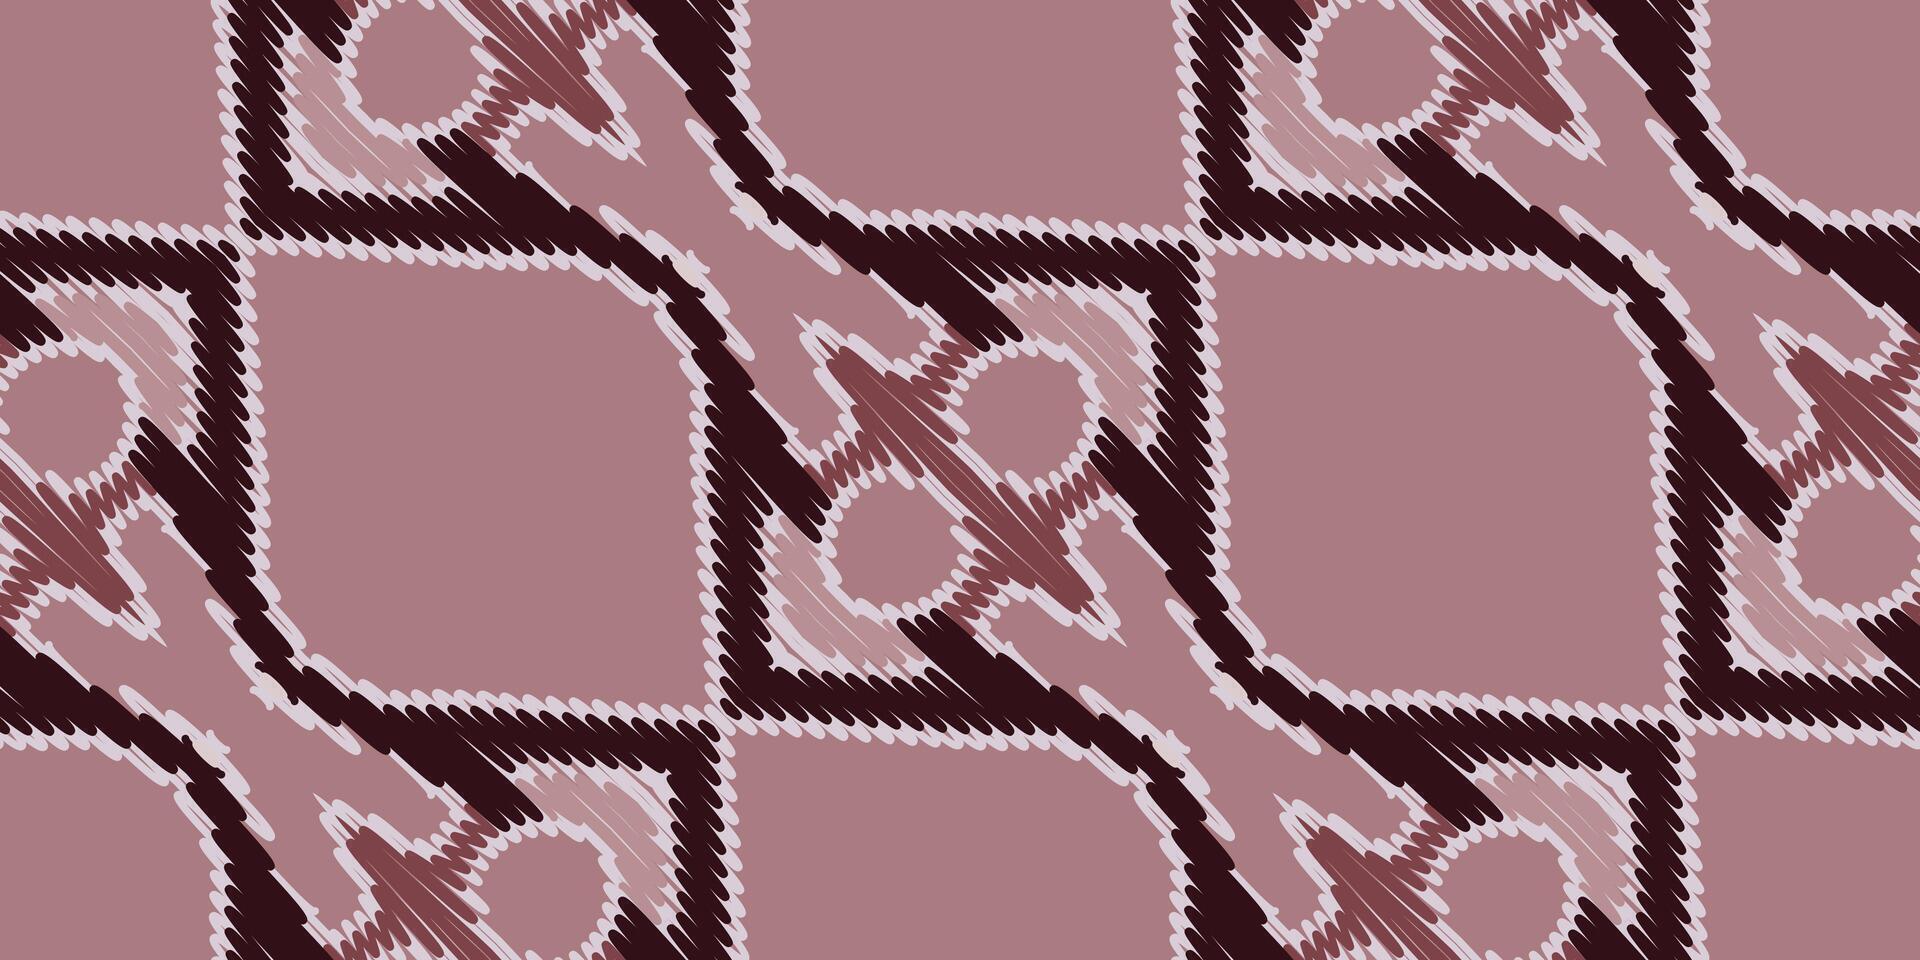 stropdas kleurstof patroon naadloos mughal architectuur motief borduurwerk, ikat borduurwerk vector ontwerp voor afdrukken patroon wijnoogst bloem volk Navajo lapwerk patroon